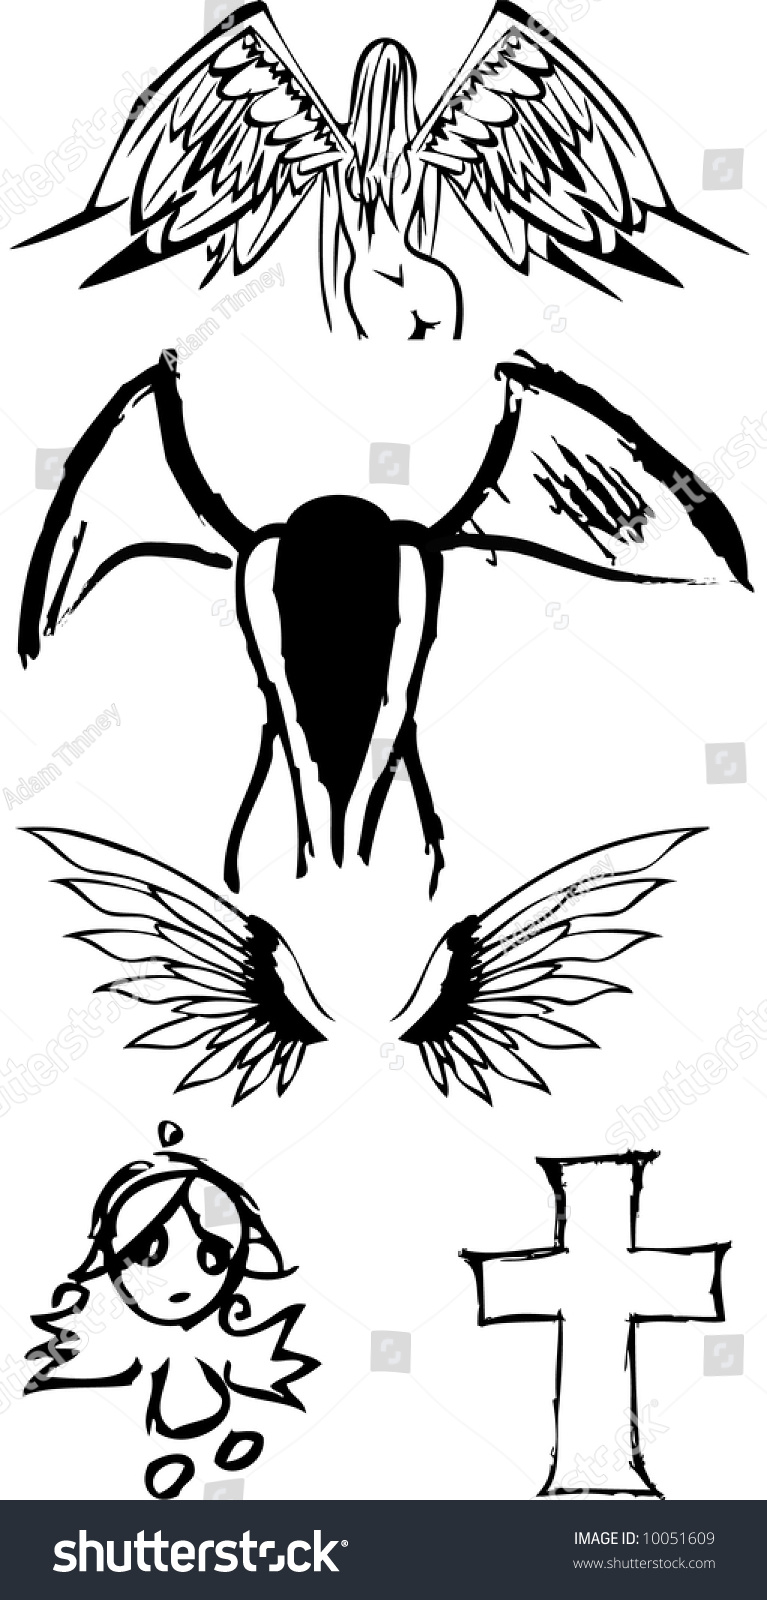 Angelic Symbols Stock Vector Illustration 10051609 : Shutterstock